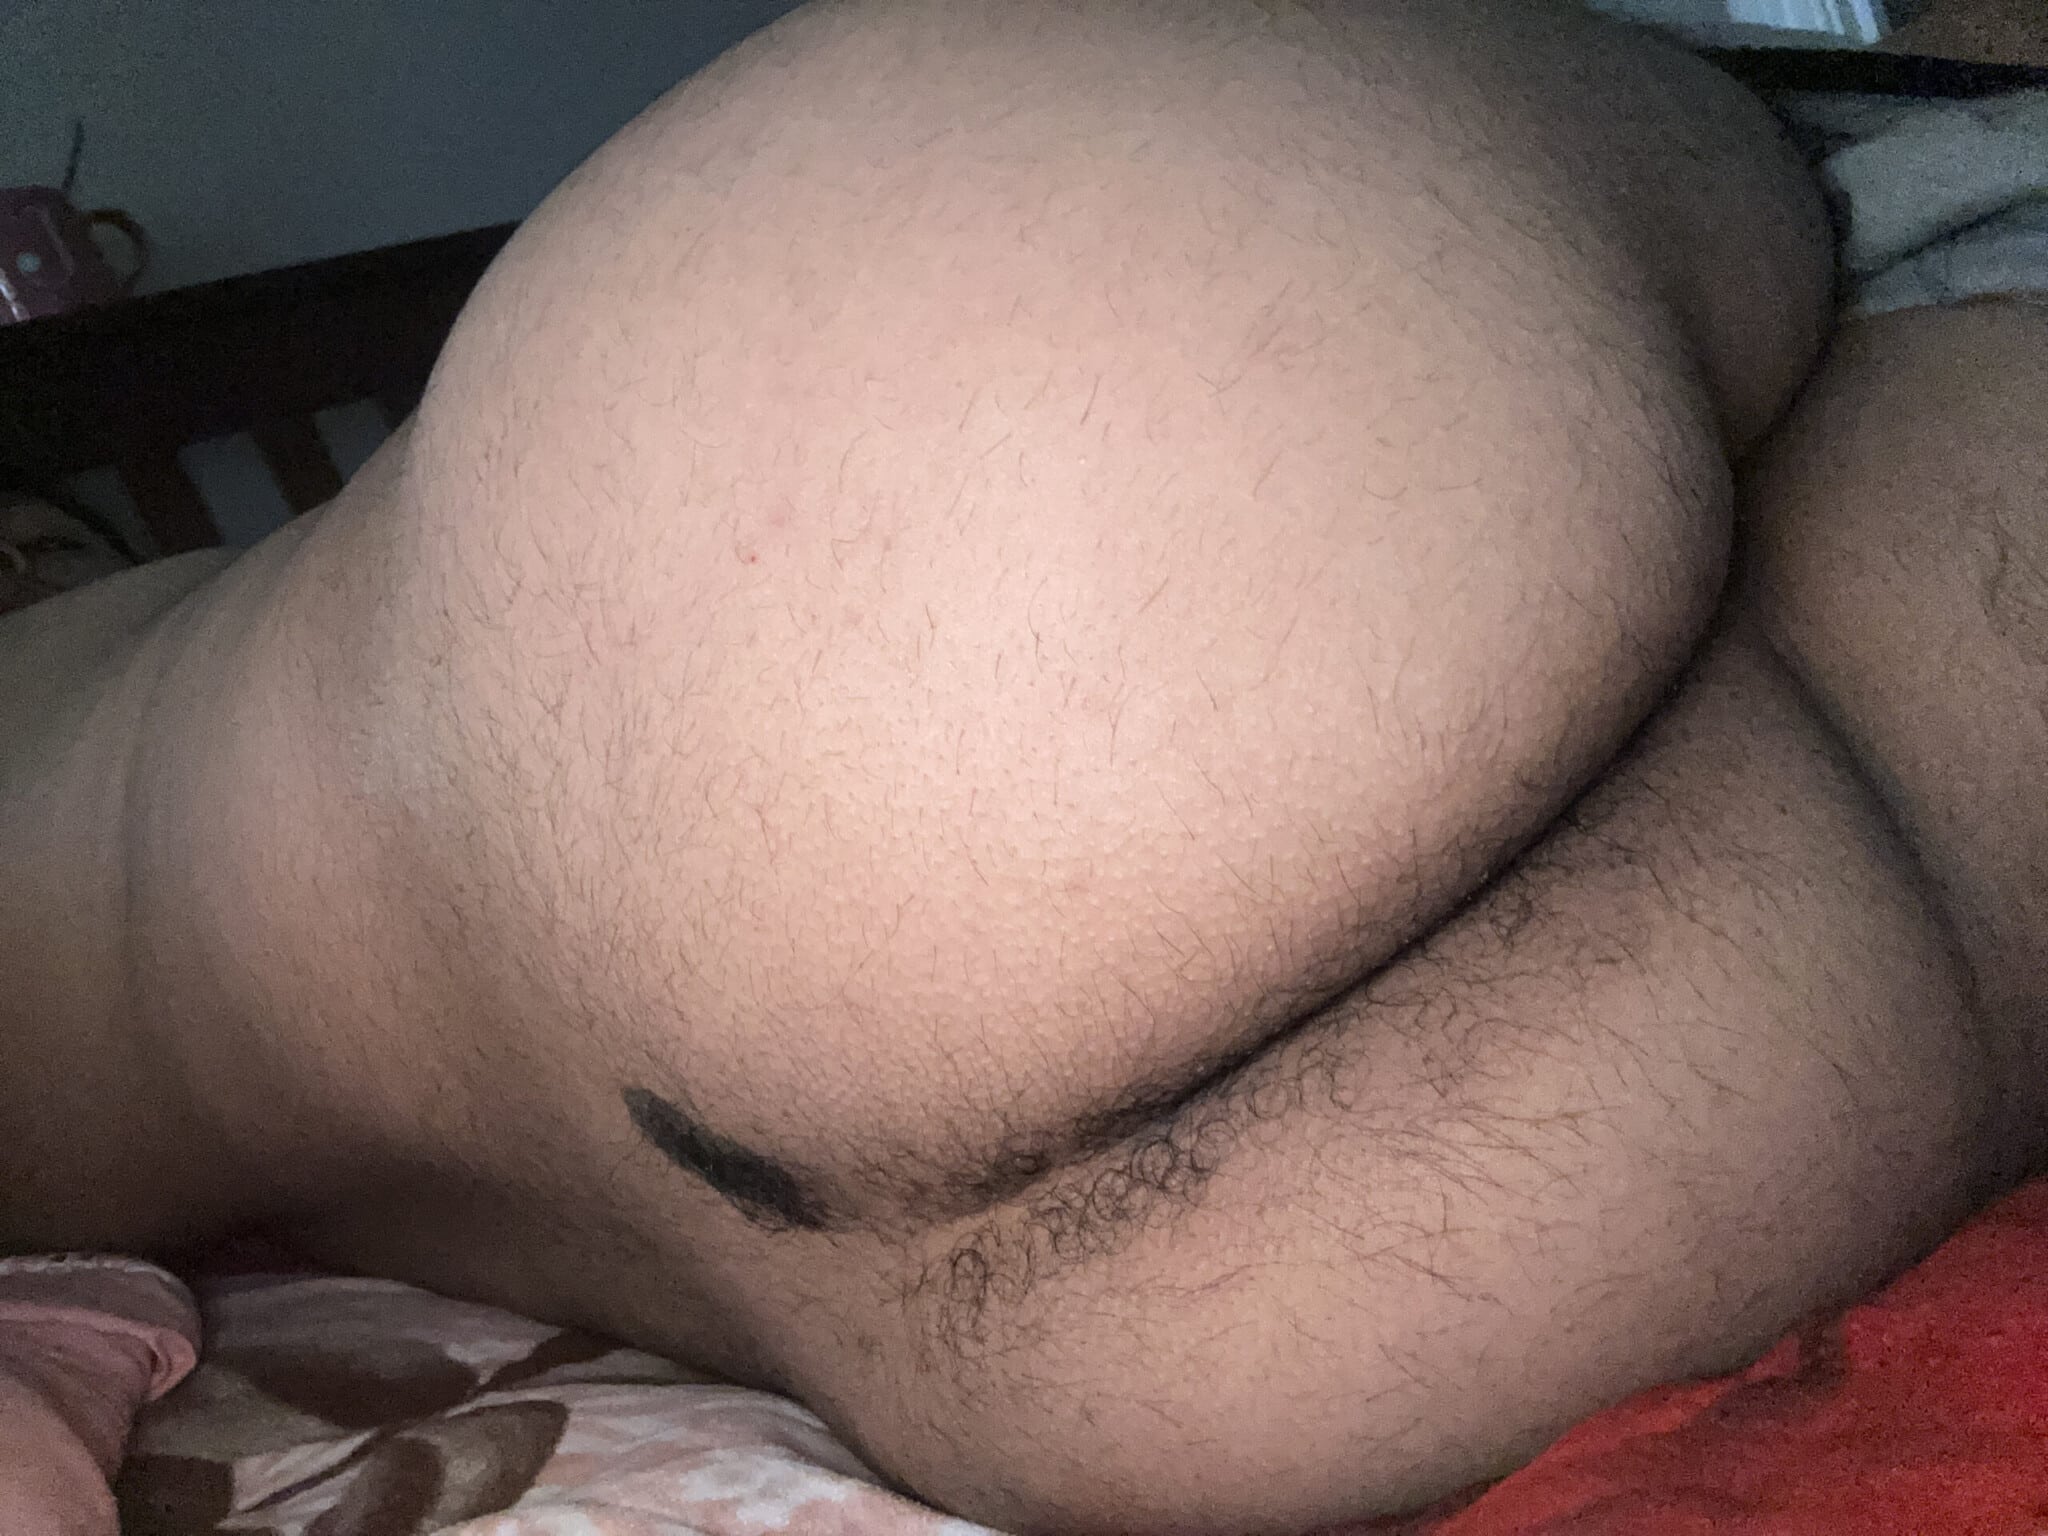 Ass Flash Pics: Big booty pic Sexxx